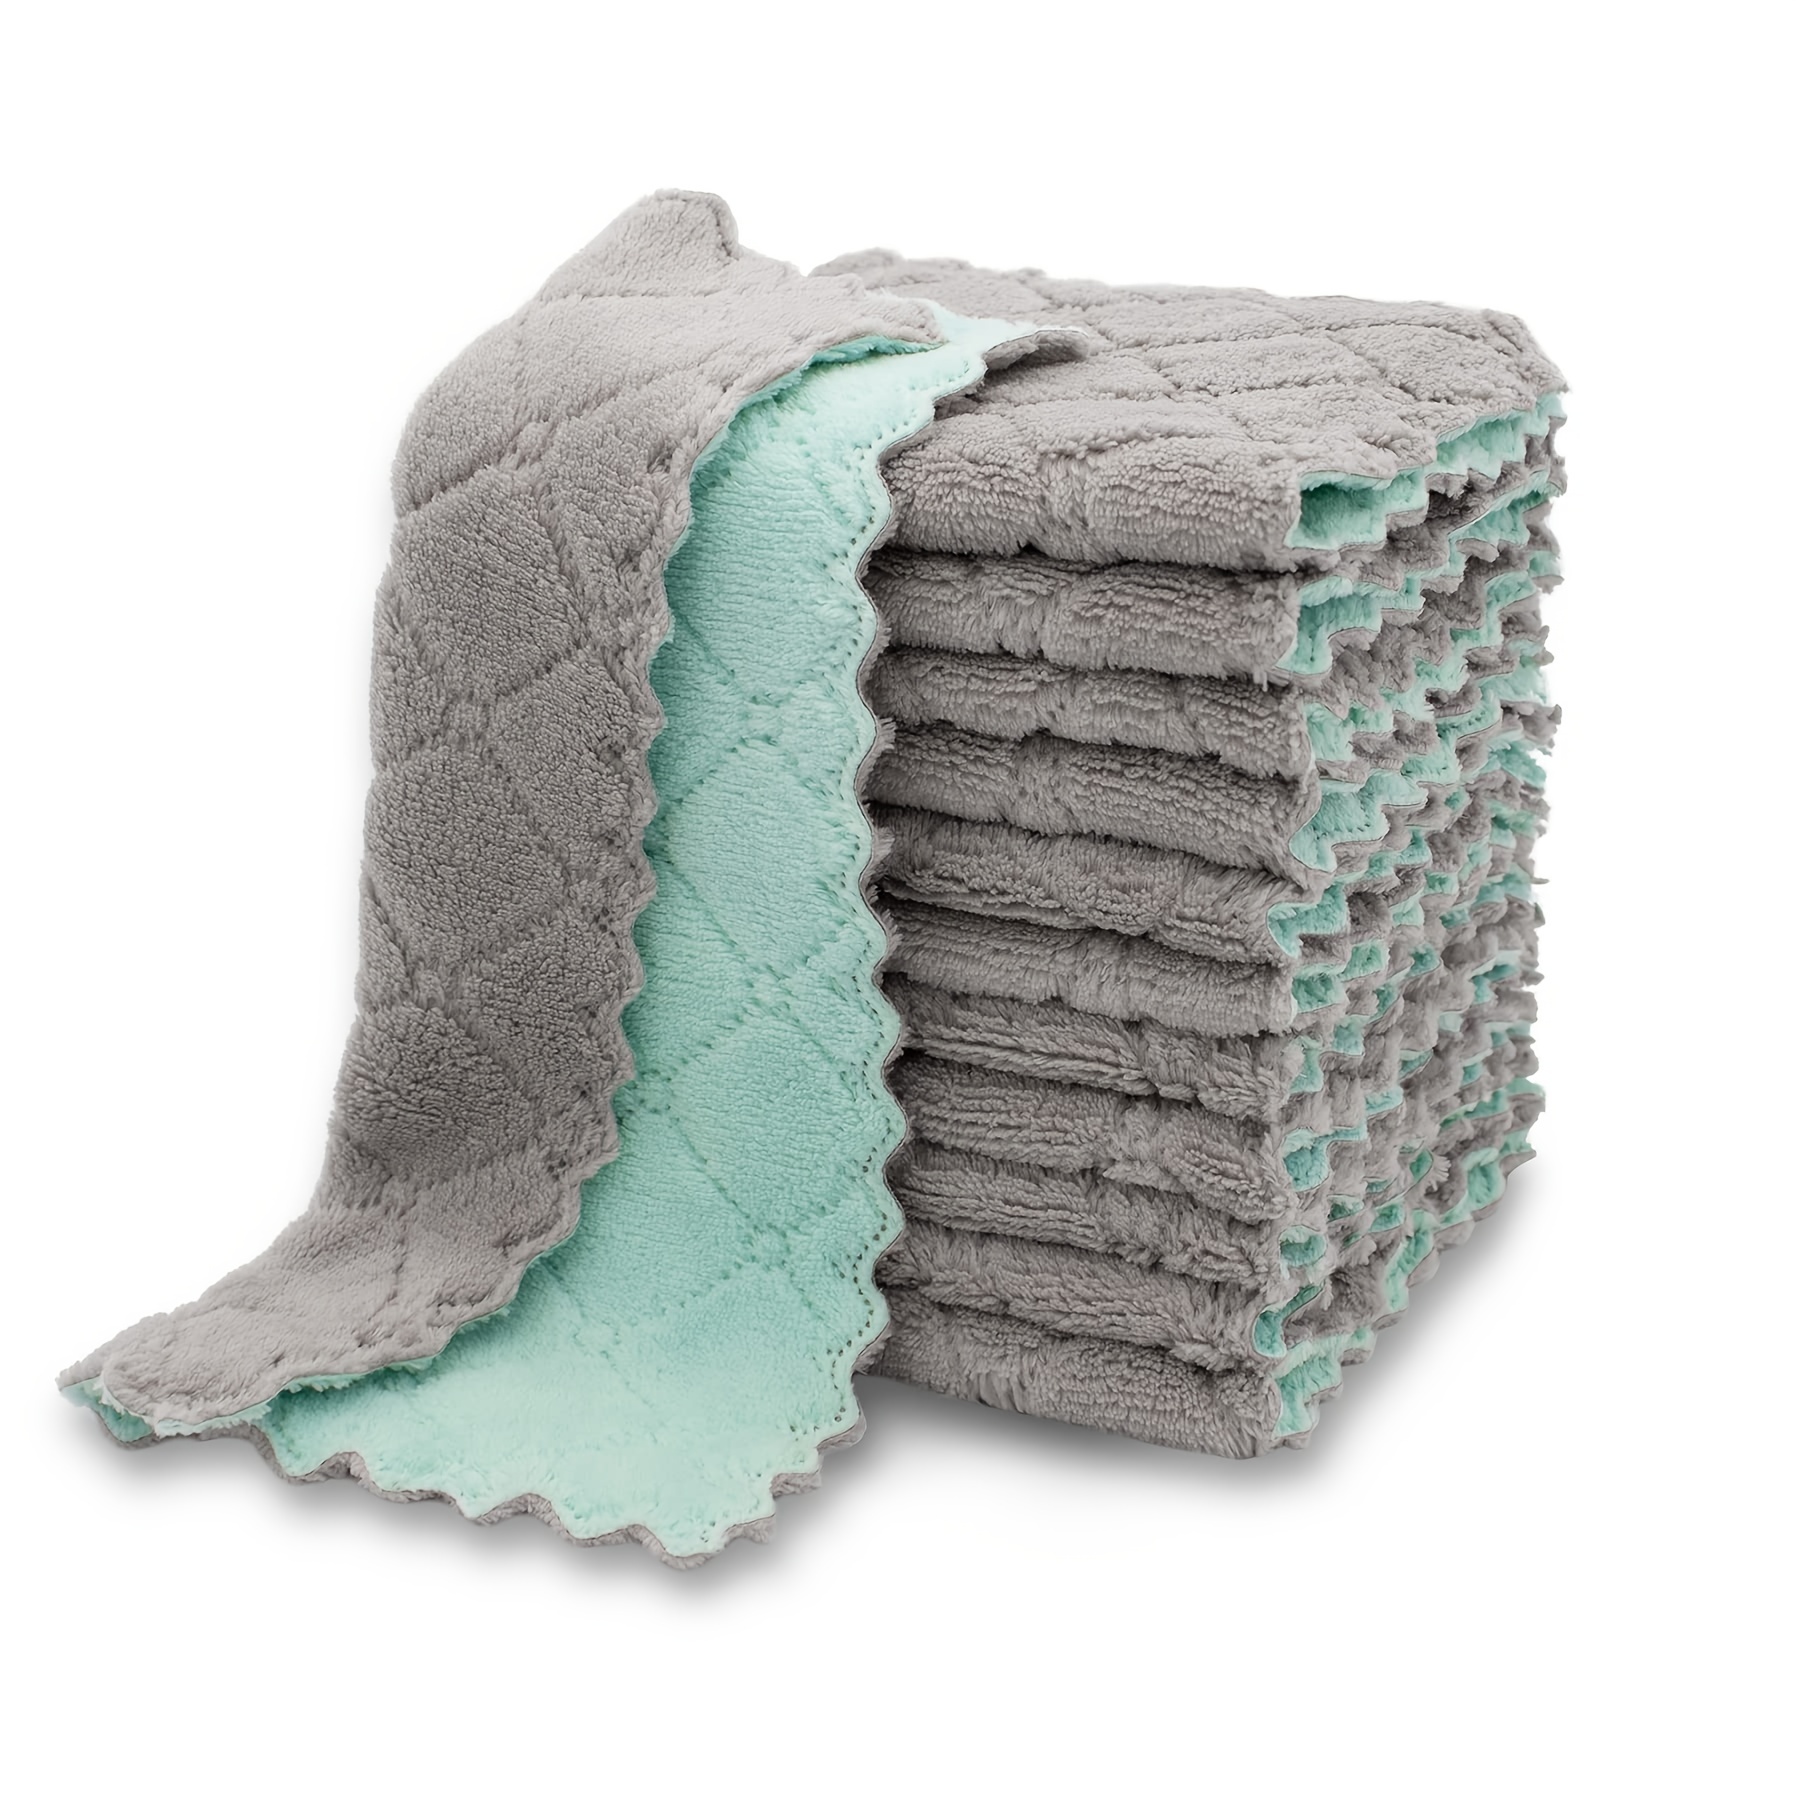 Dish Towels - Kitchen Towel set Includes: 1 Kitchen Towel, 2 Scrubbers  -Soft Teal Dish Cloths 